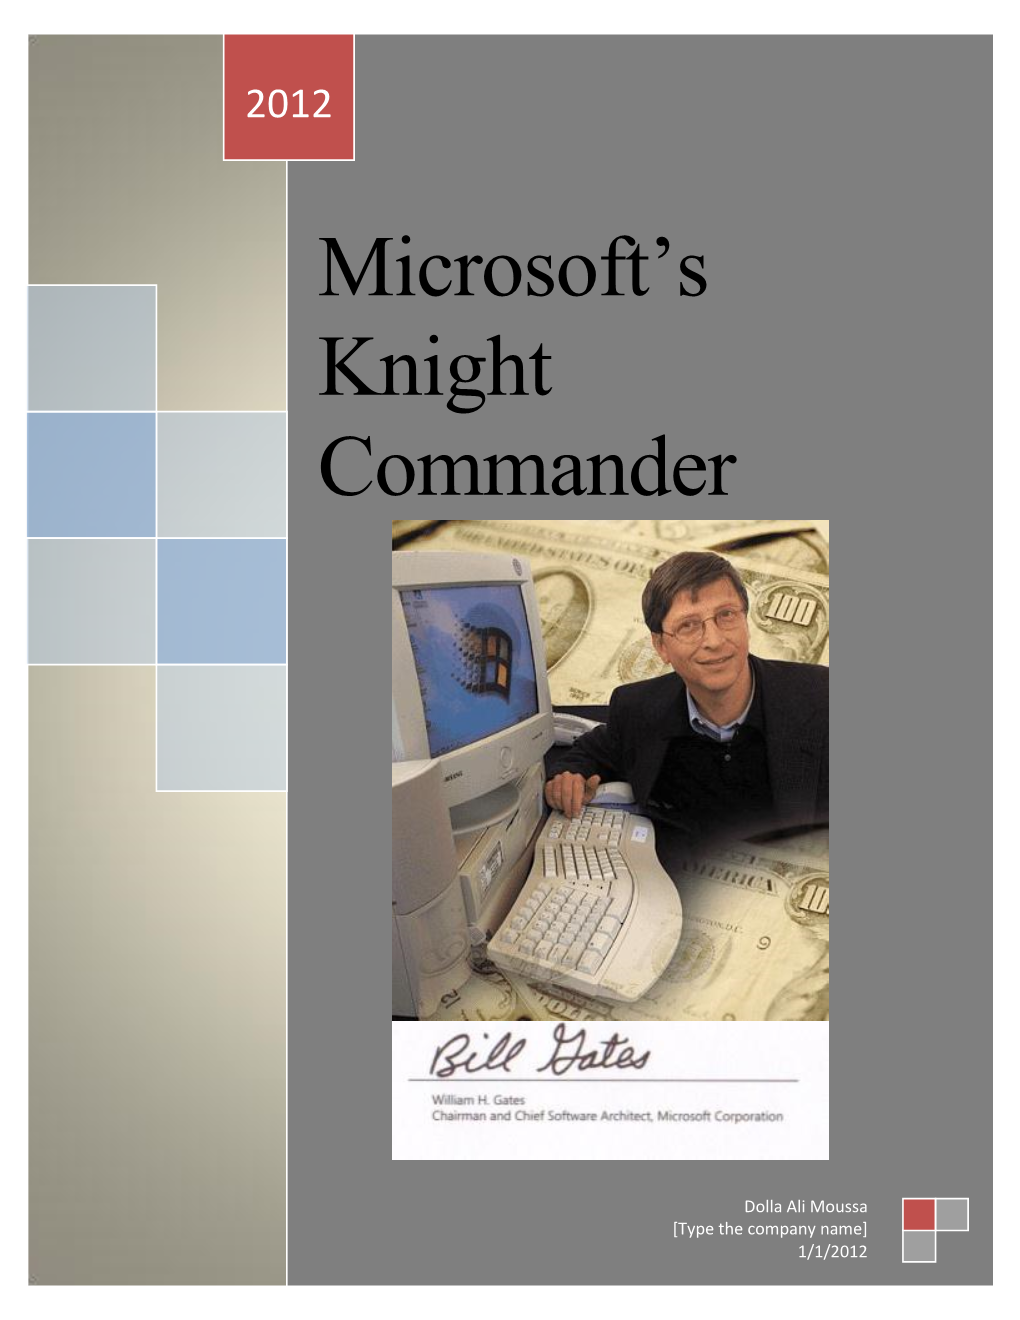 Microsoft's Knight Commander